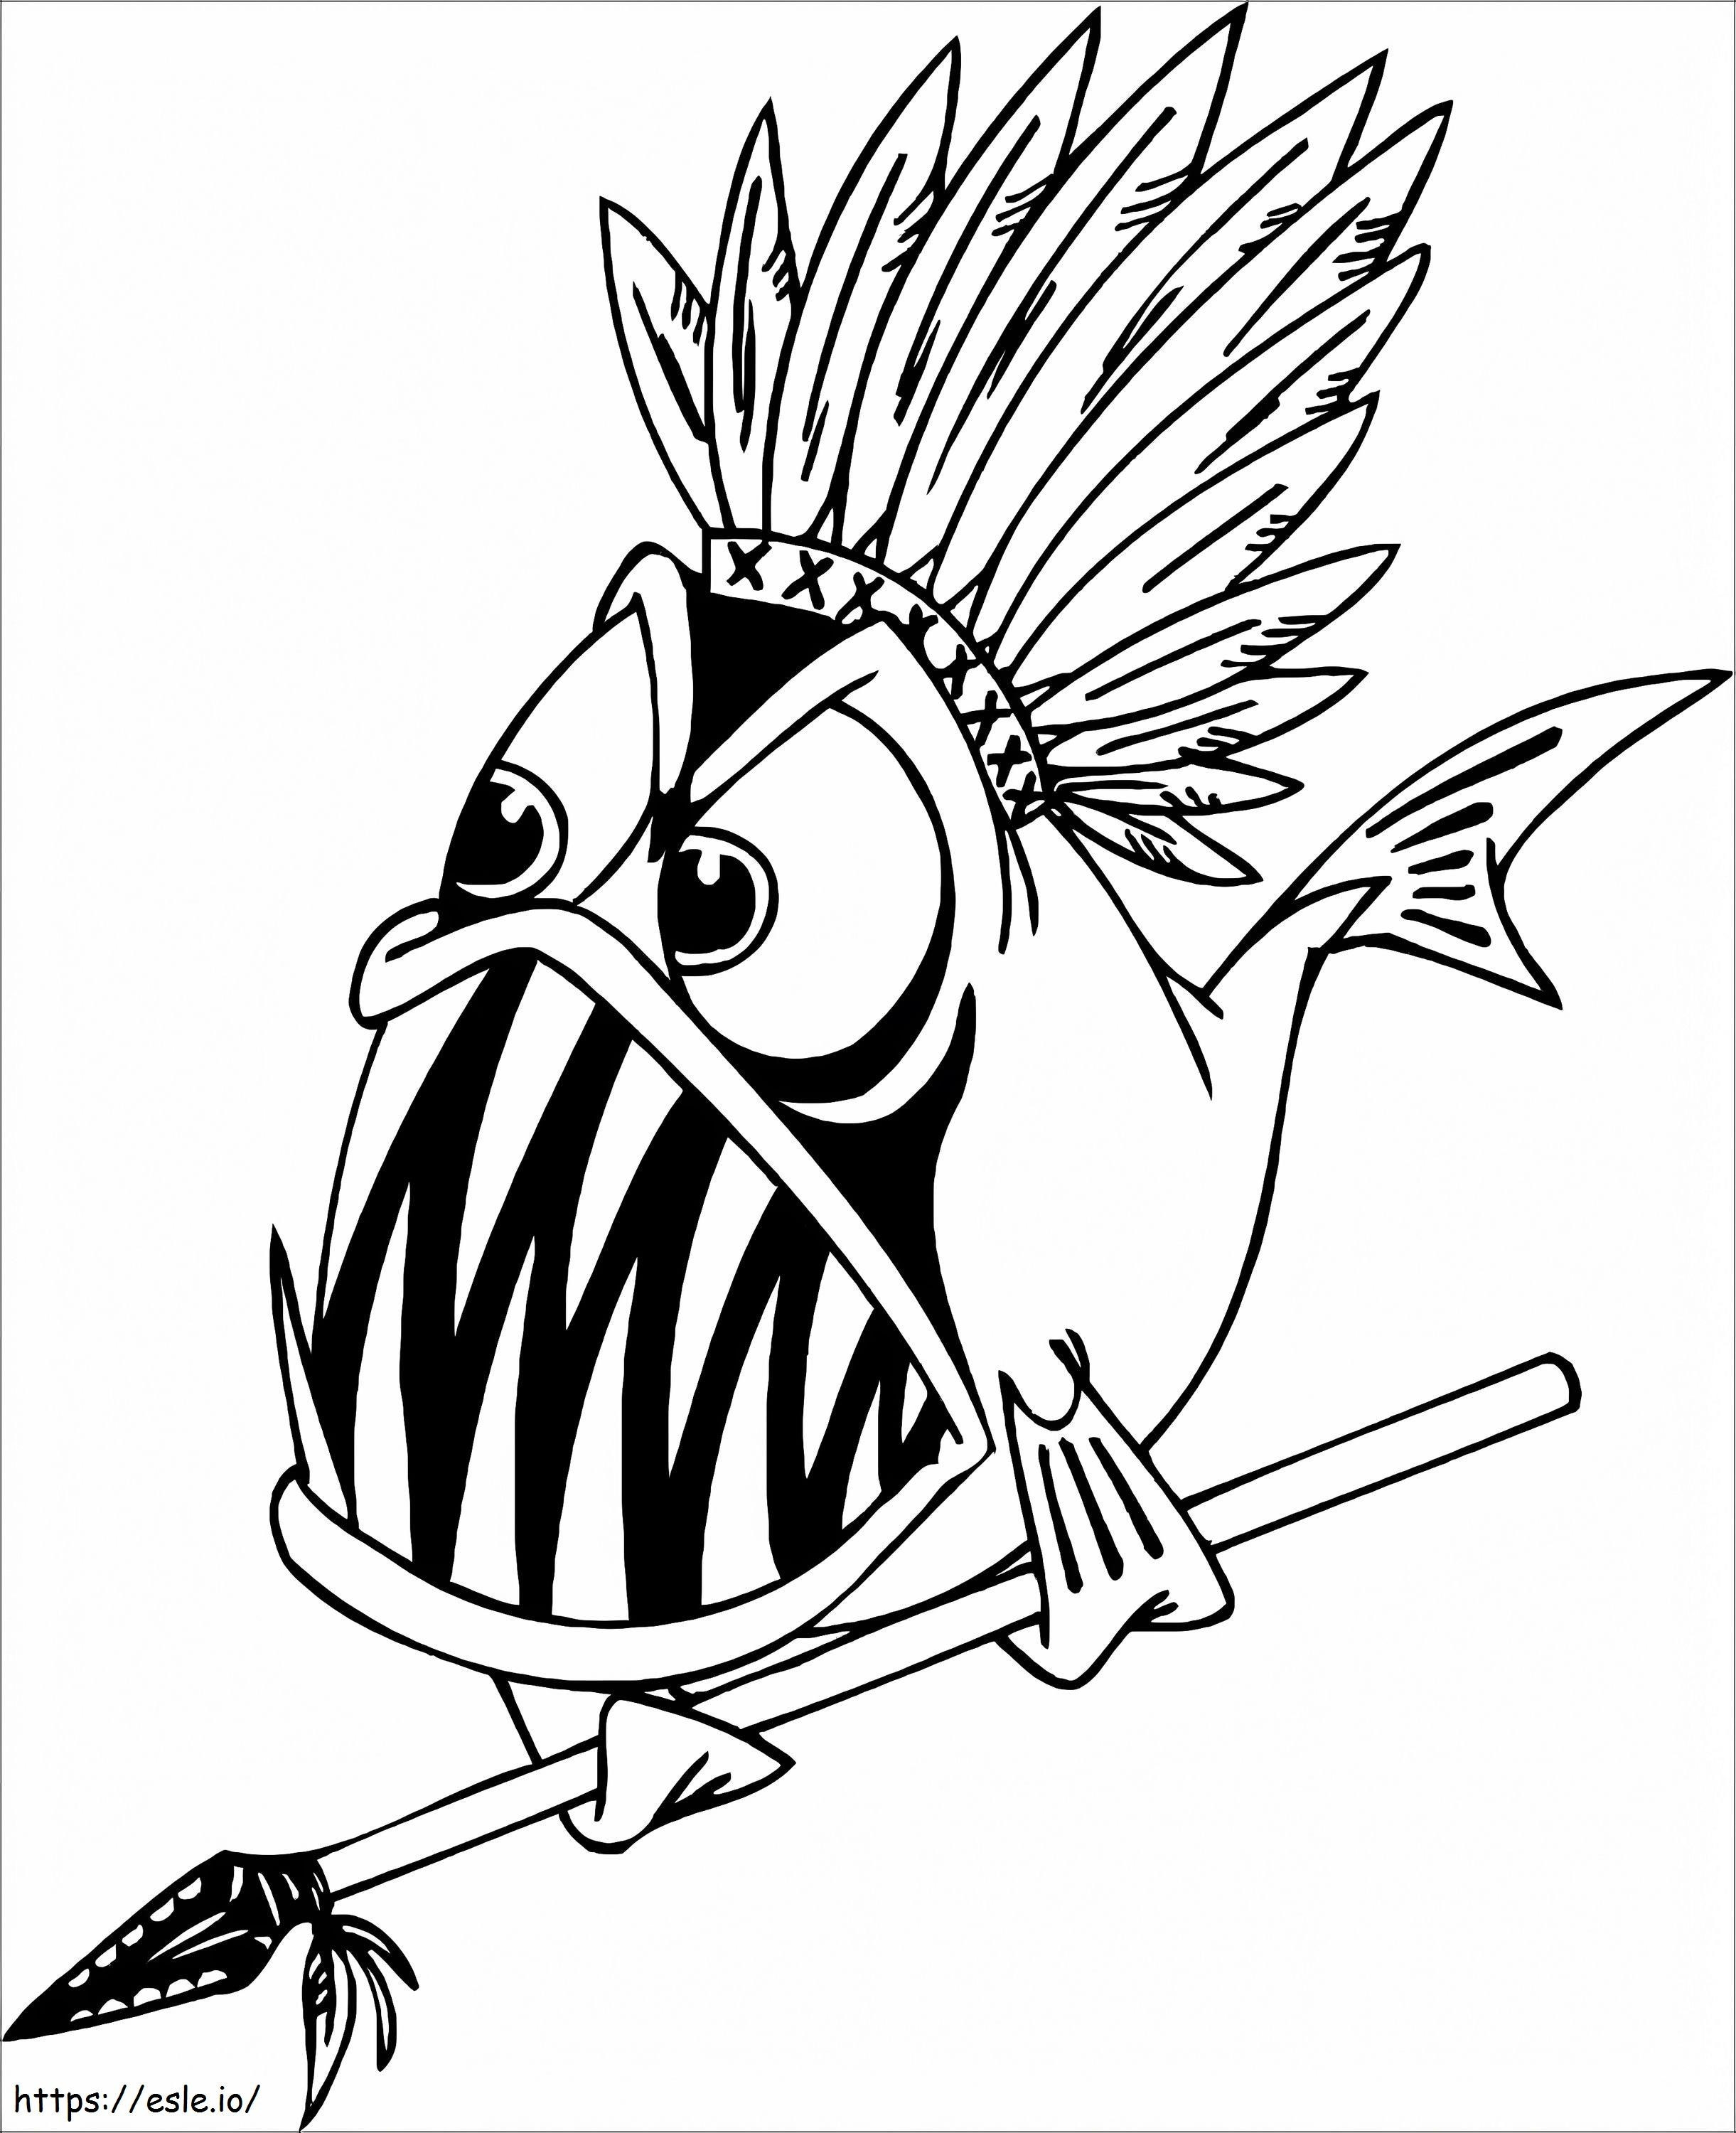 Coloriage Poisson Piranha drôle à imprimer dessin